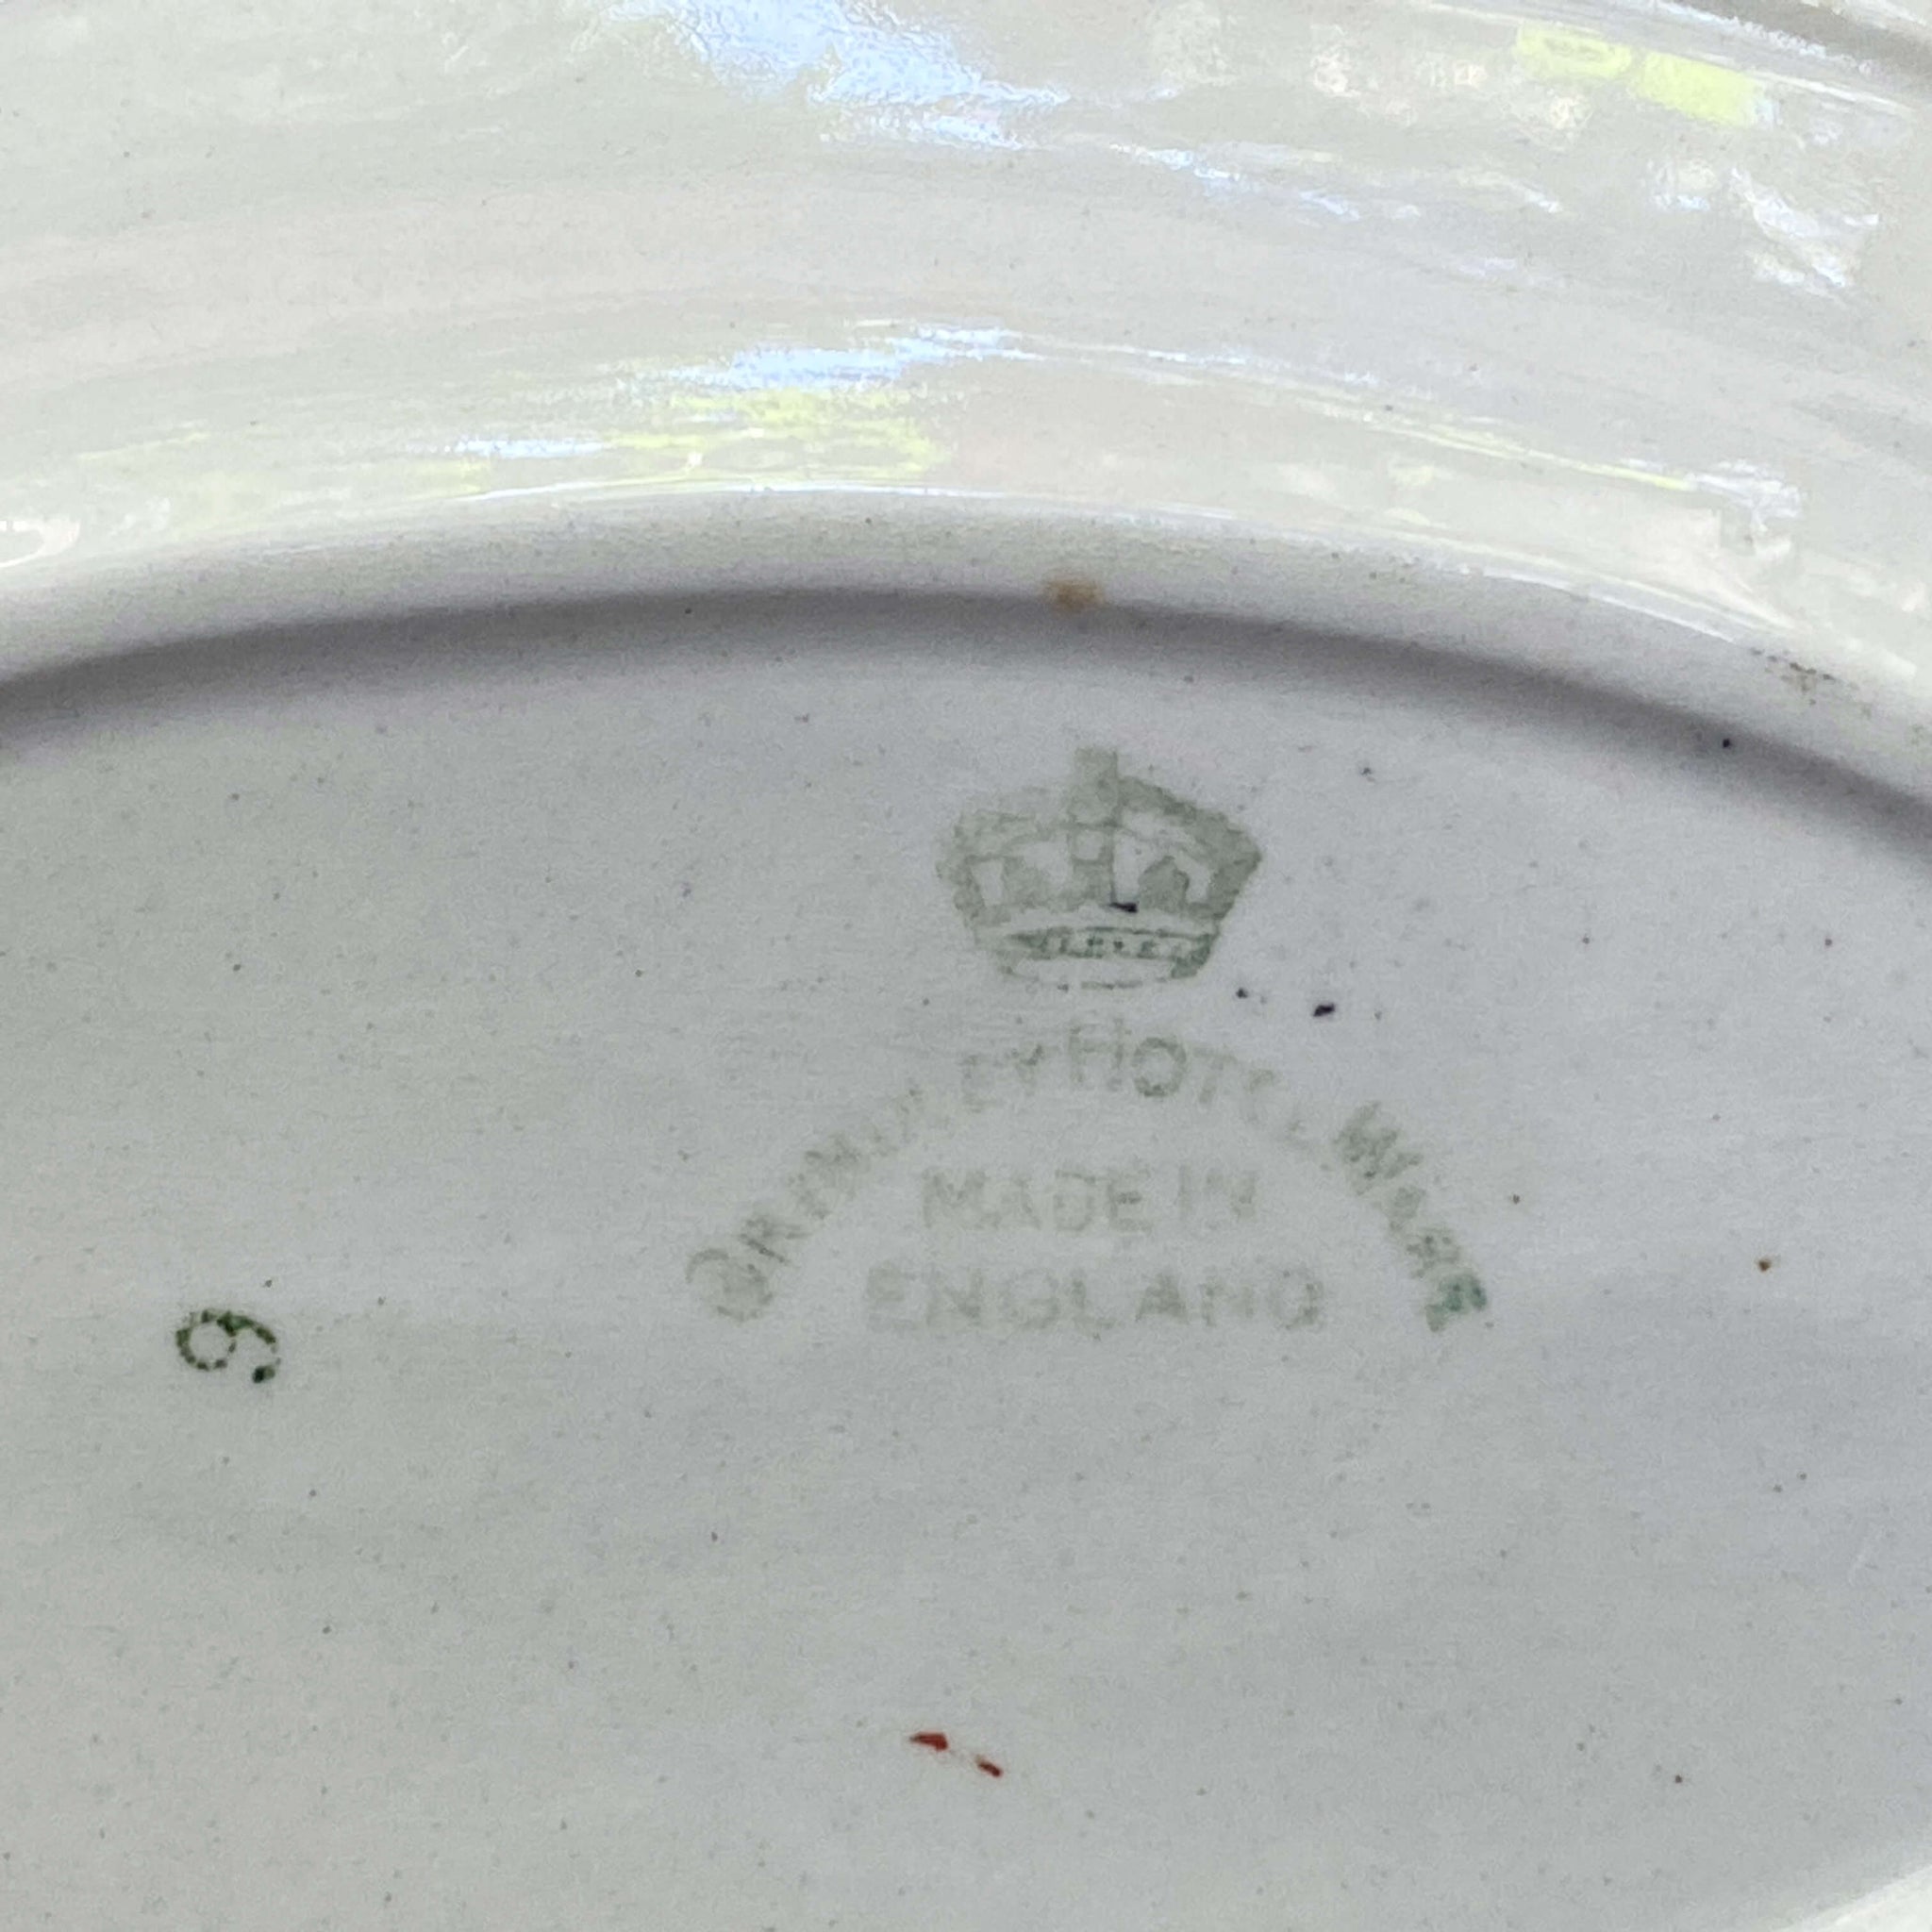 Vintage Grindley Hotelware Side Dish Platter circa 1920-1932